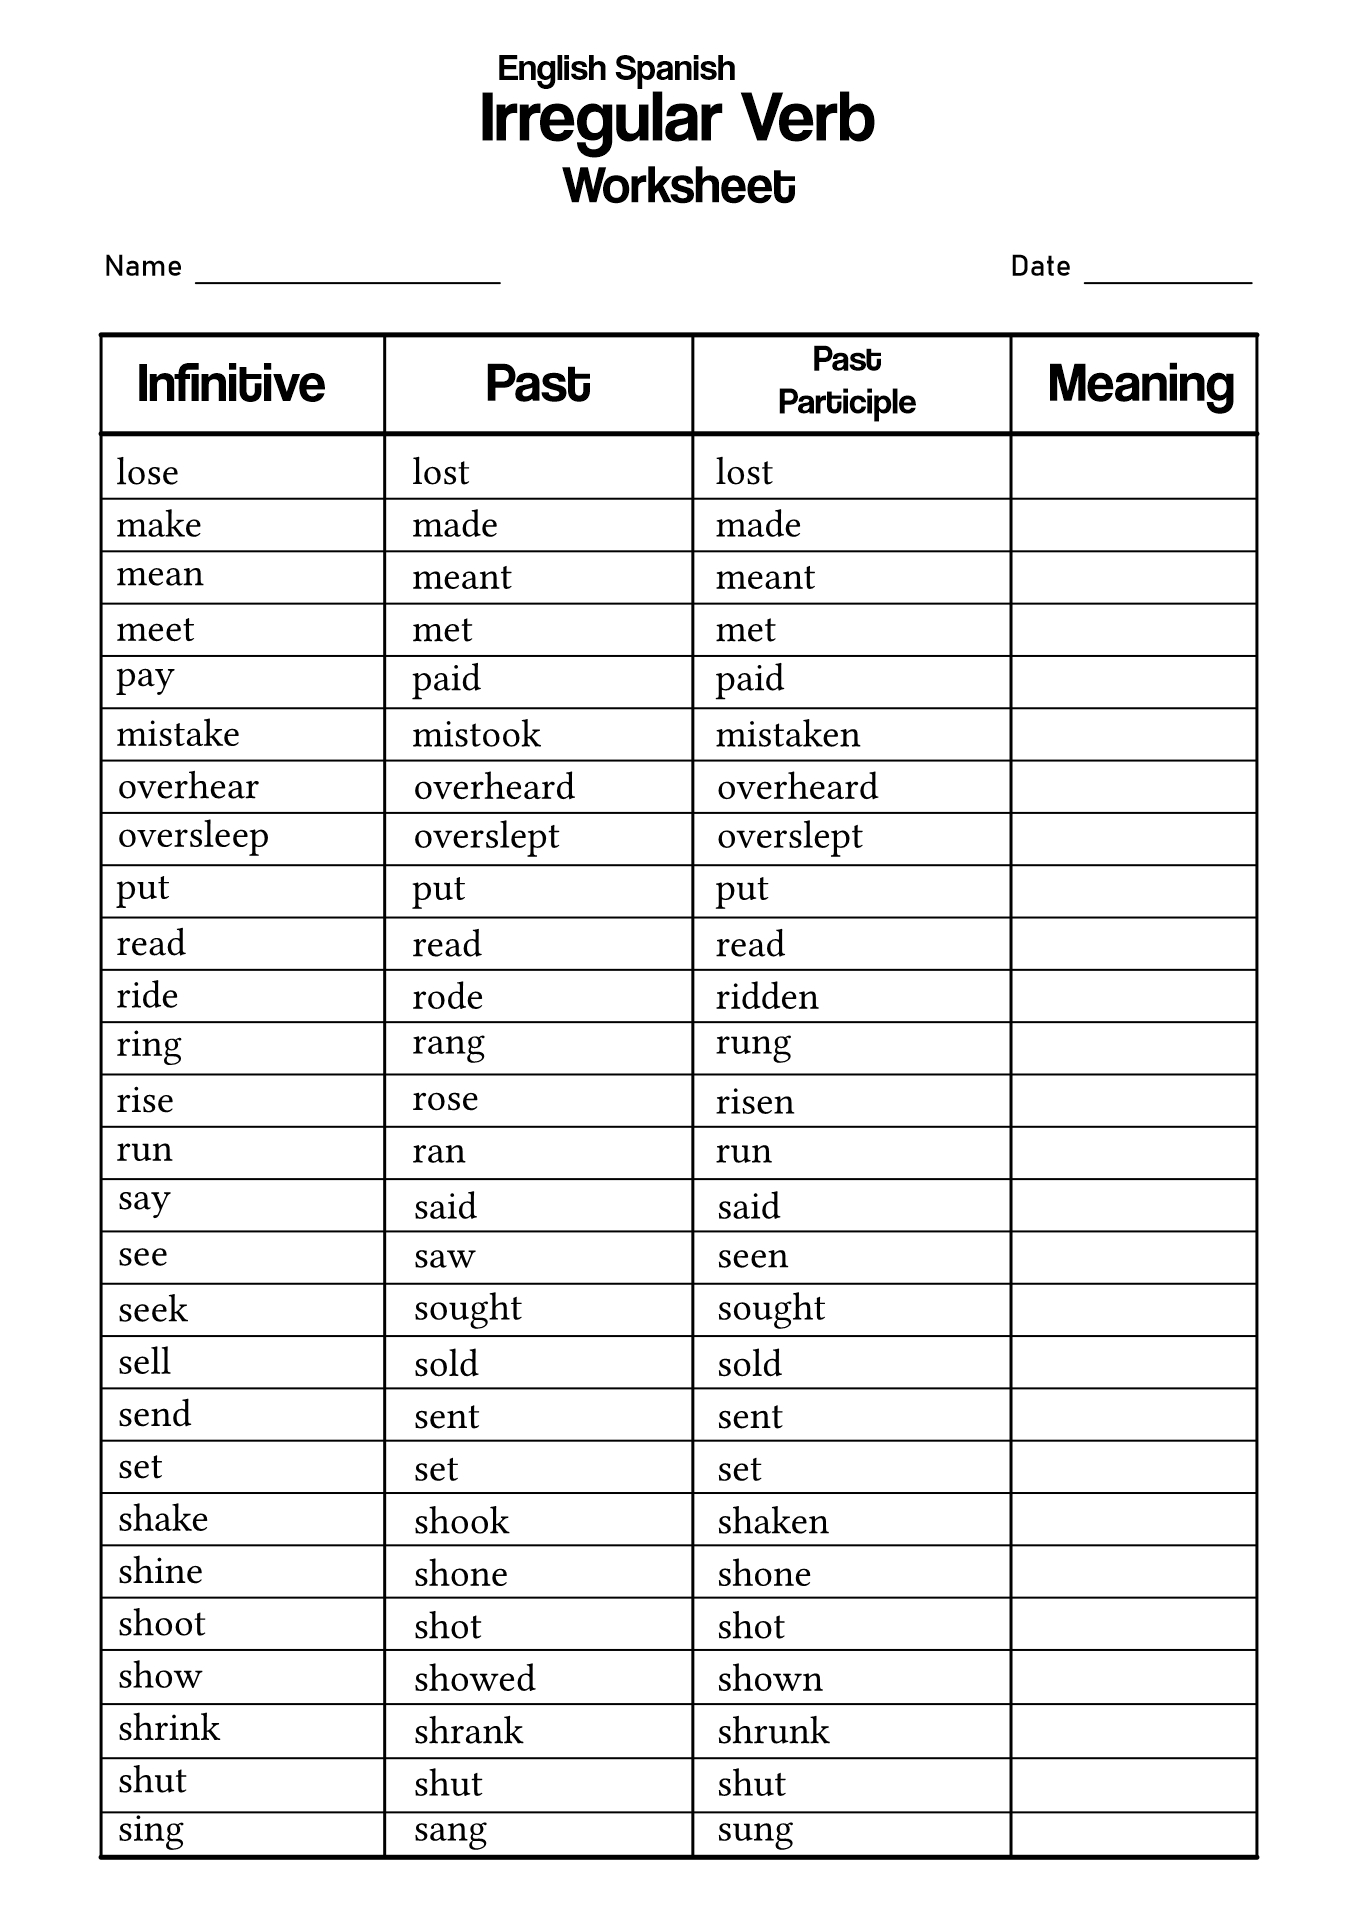 English and Spanish Irregular Verbs Worksheet Image